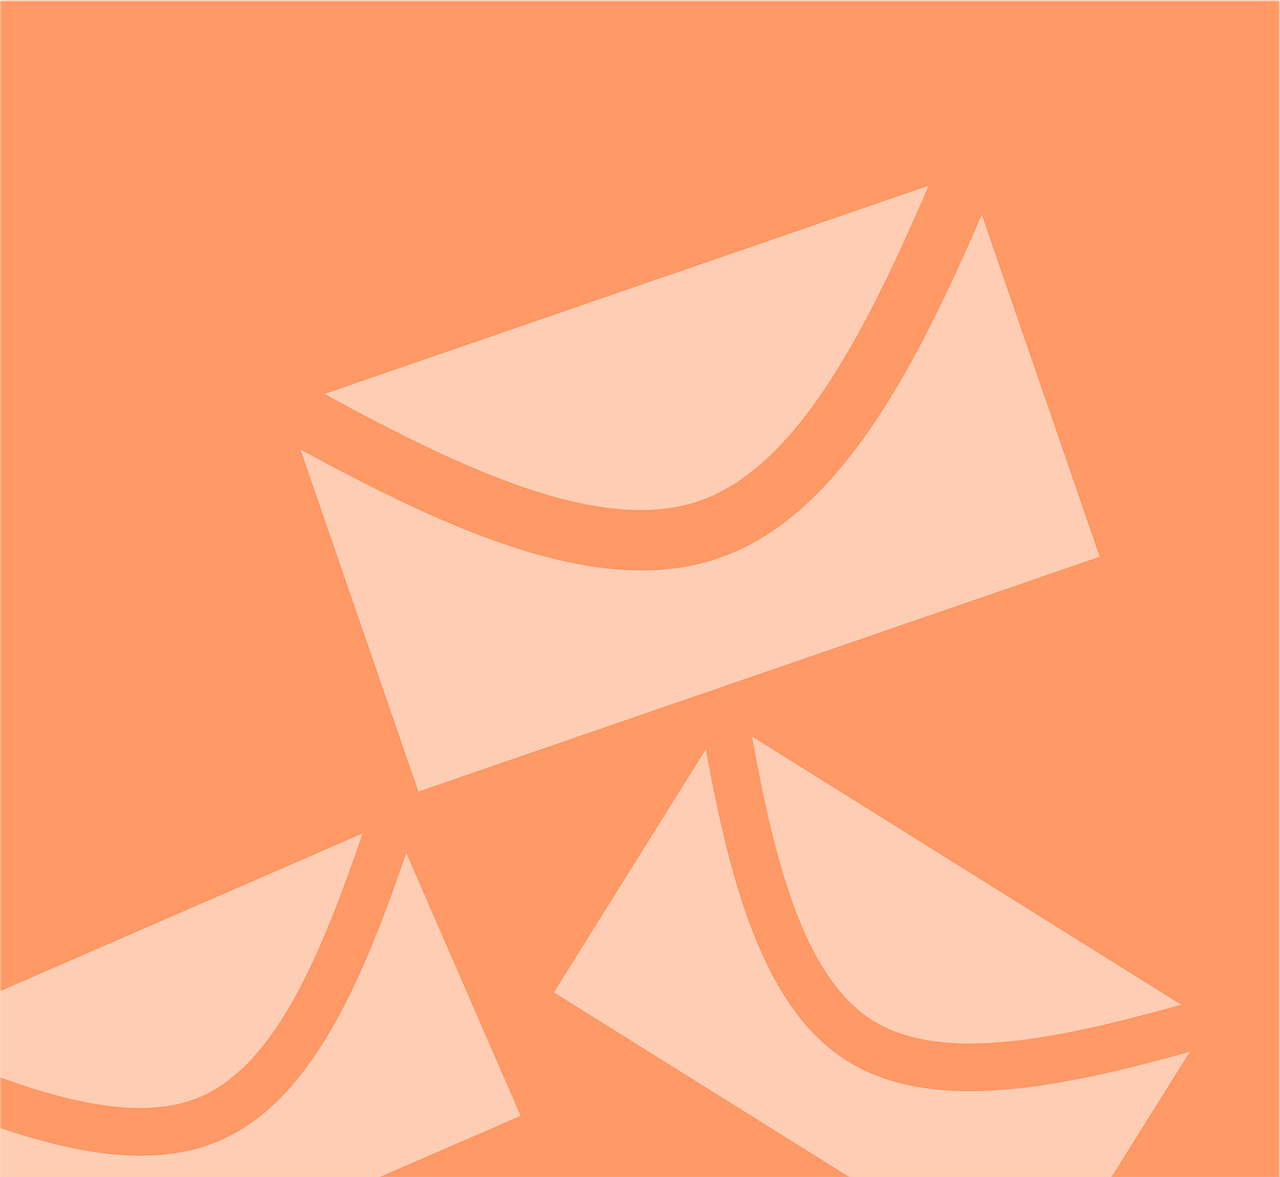 a couple of envelopes sitting on top of each other, an illustration of, unsplash, postminimalism, orange hue, icon pattern, background image, crunchyroll